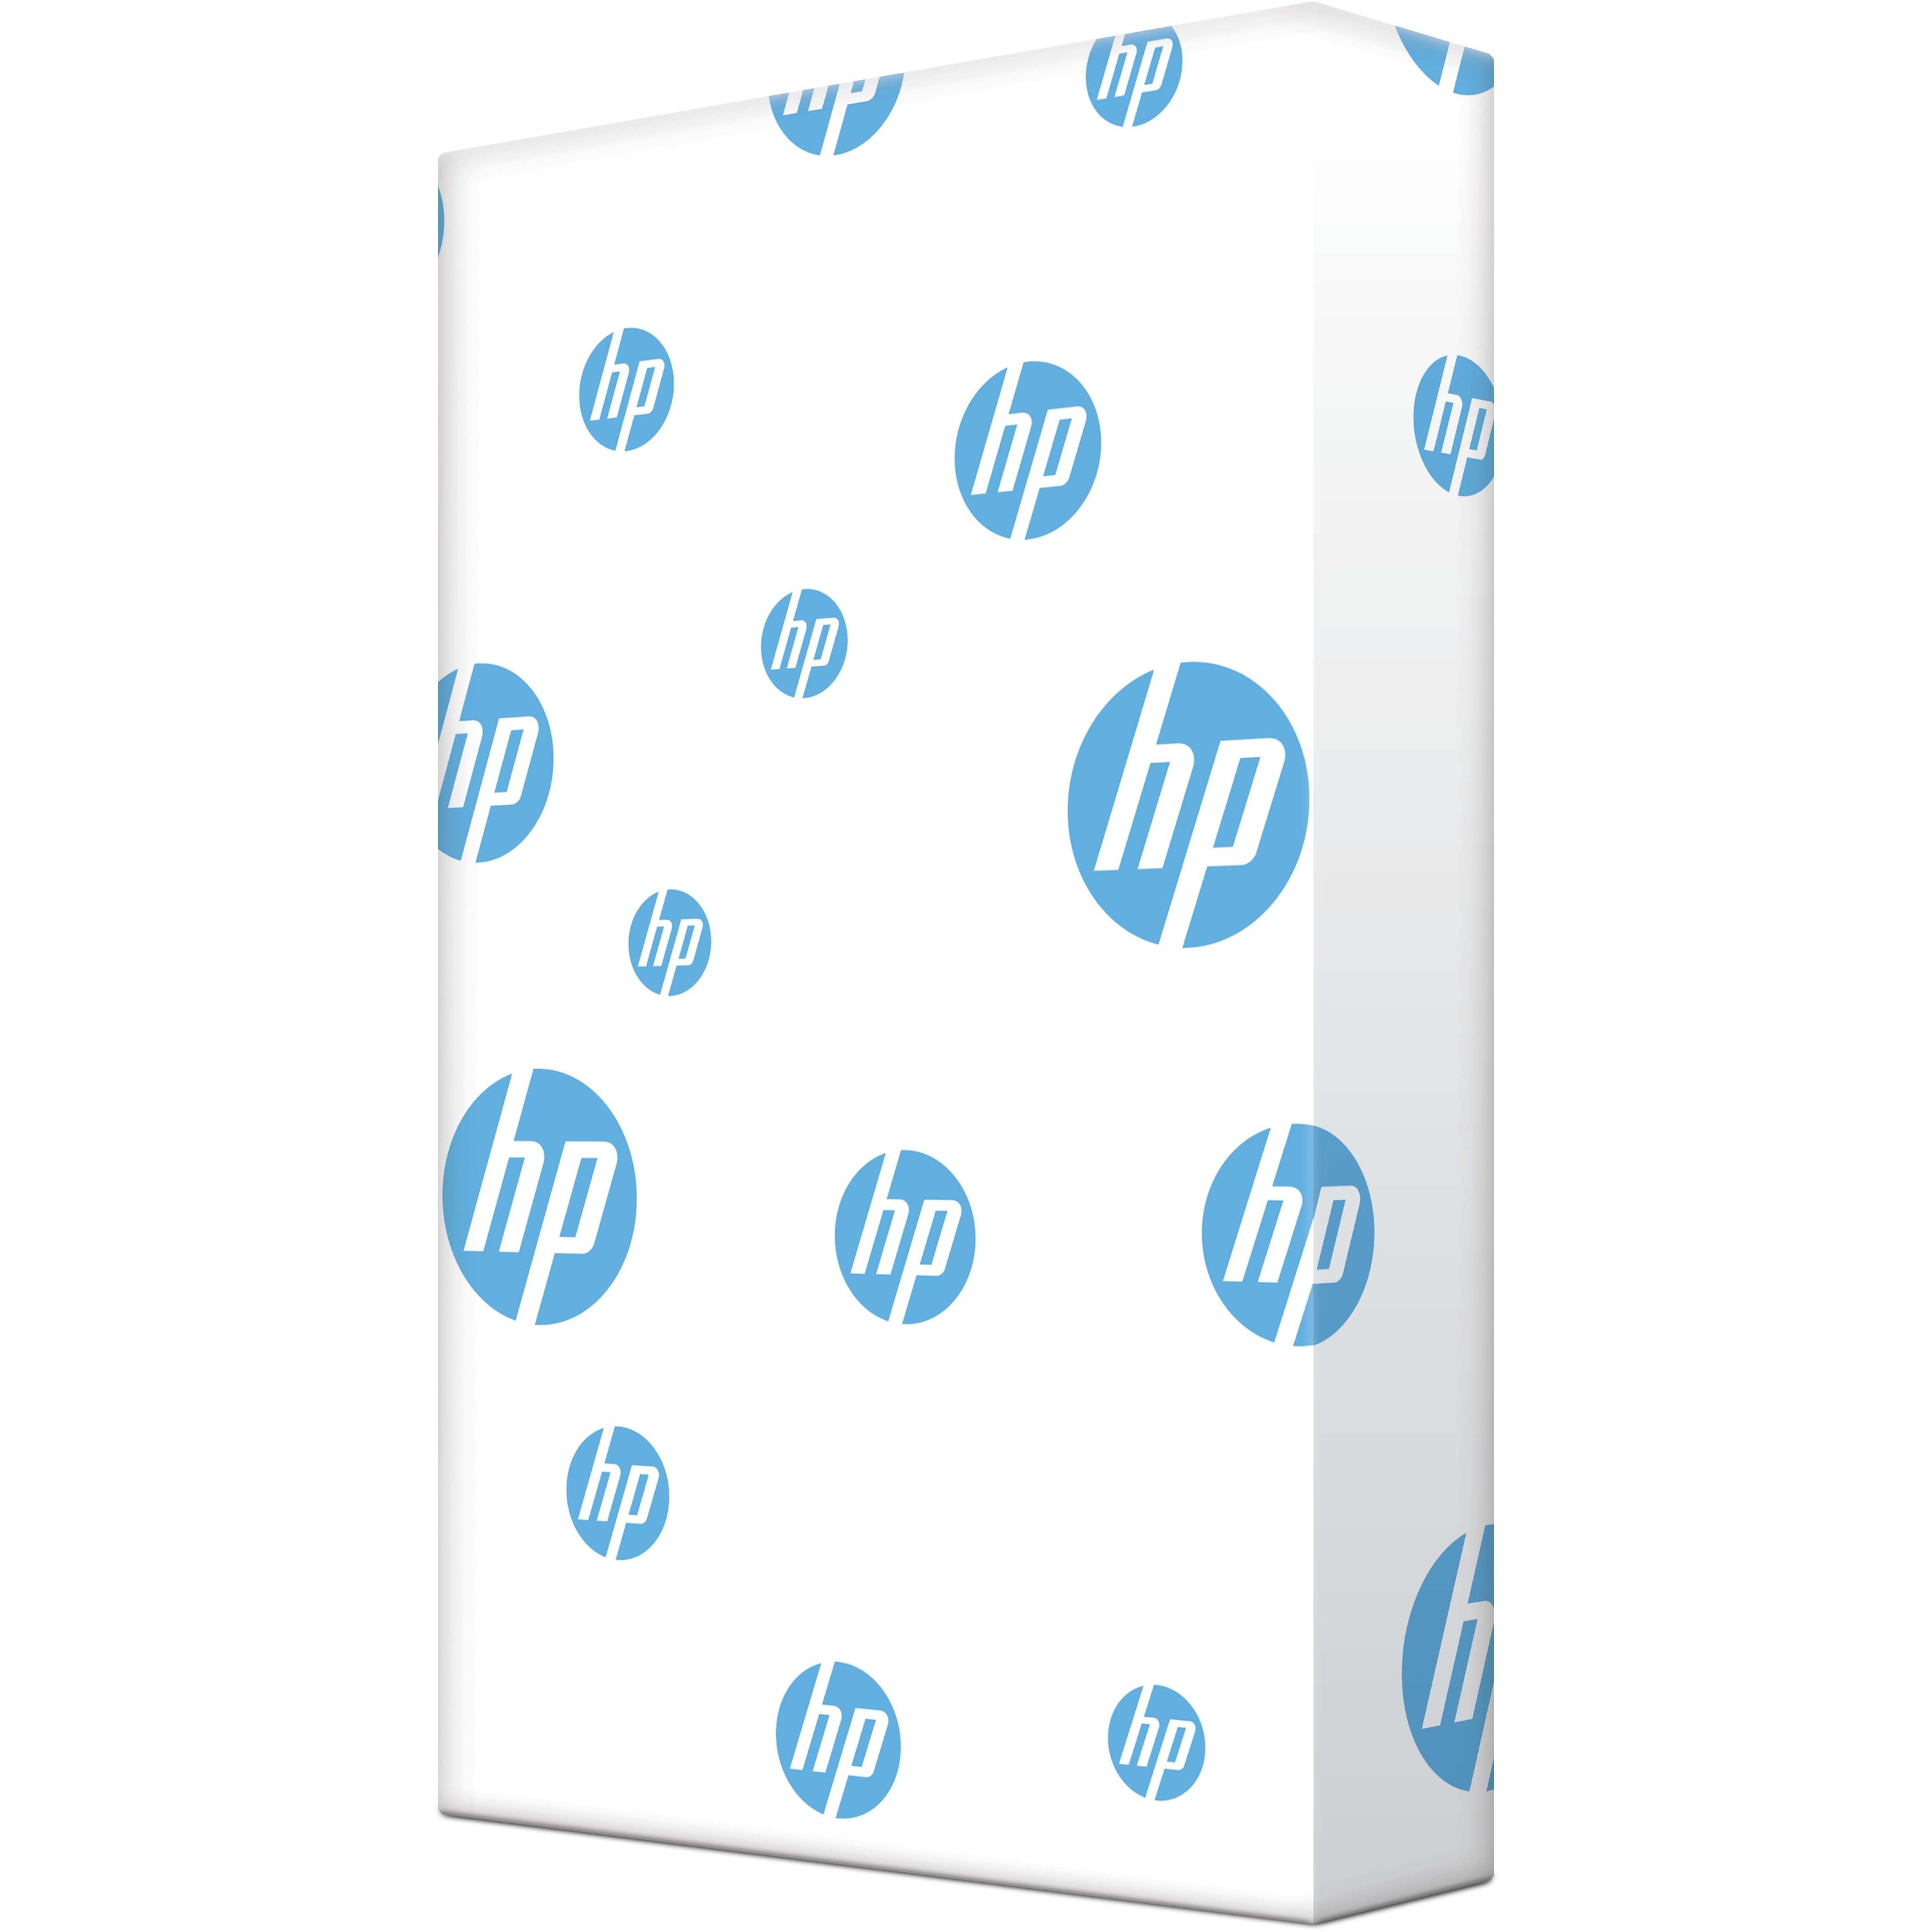 HP Office20 8.5 x 11 Multipurpose Paper, 20 lbs., 92 Brightness